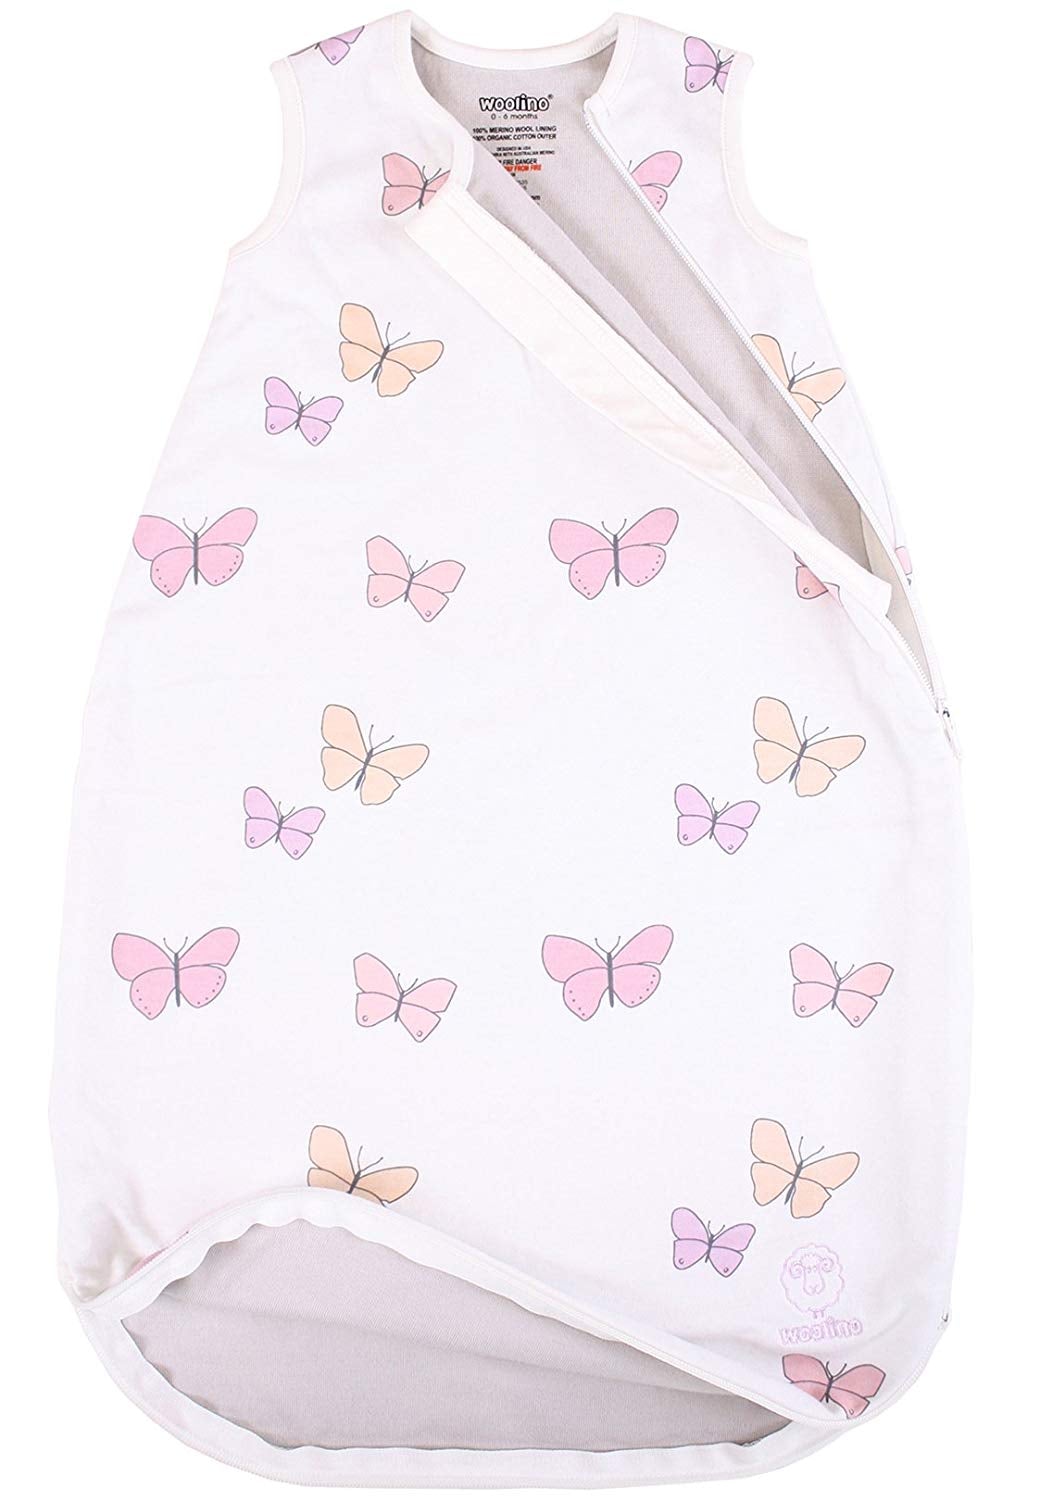 Woolino 4 Season BASIC Merino Wool Baby Sleep Bag in Butterfly